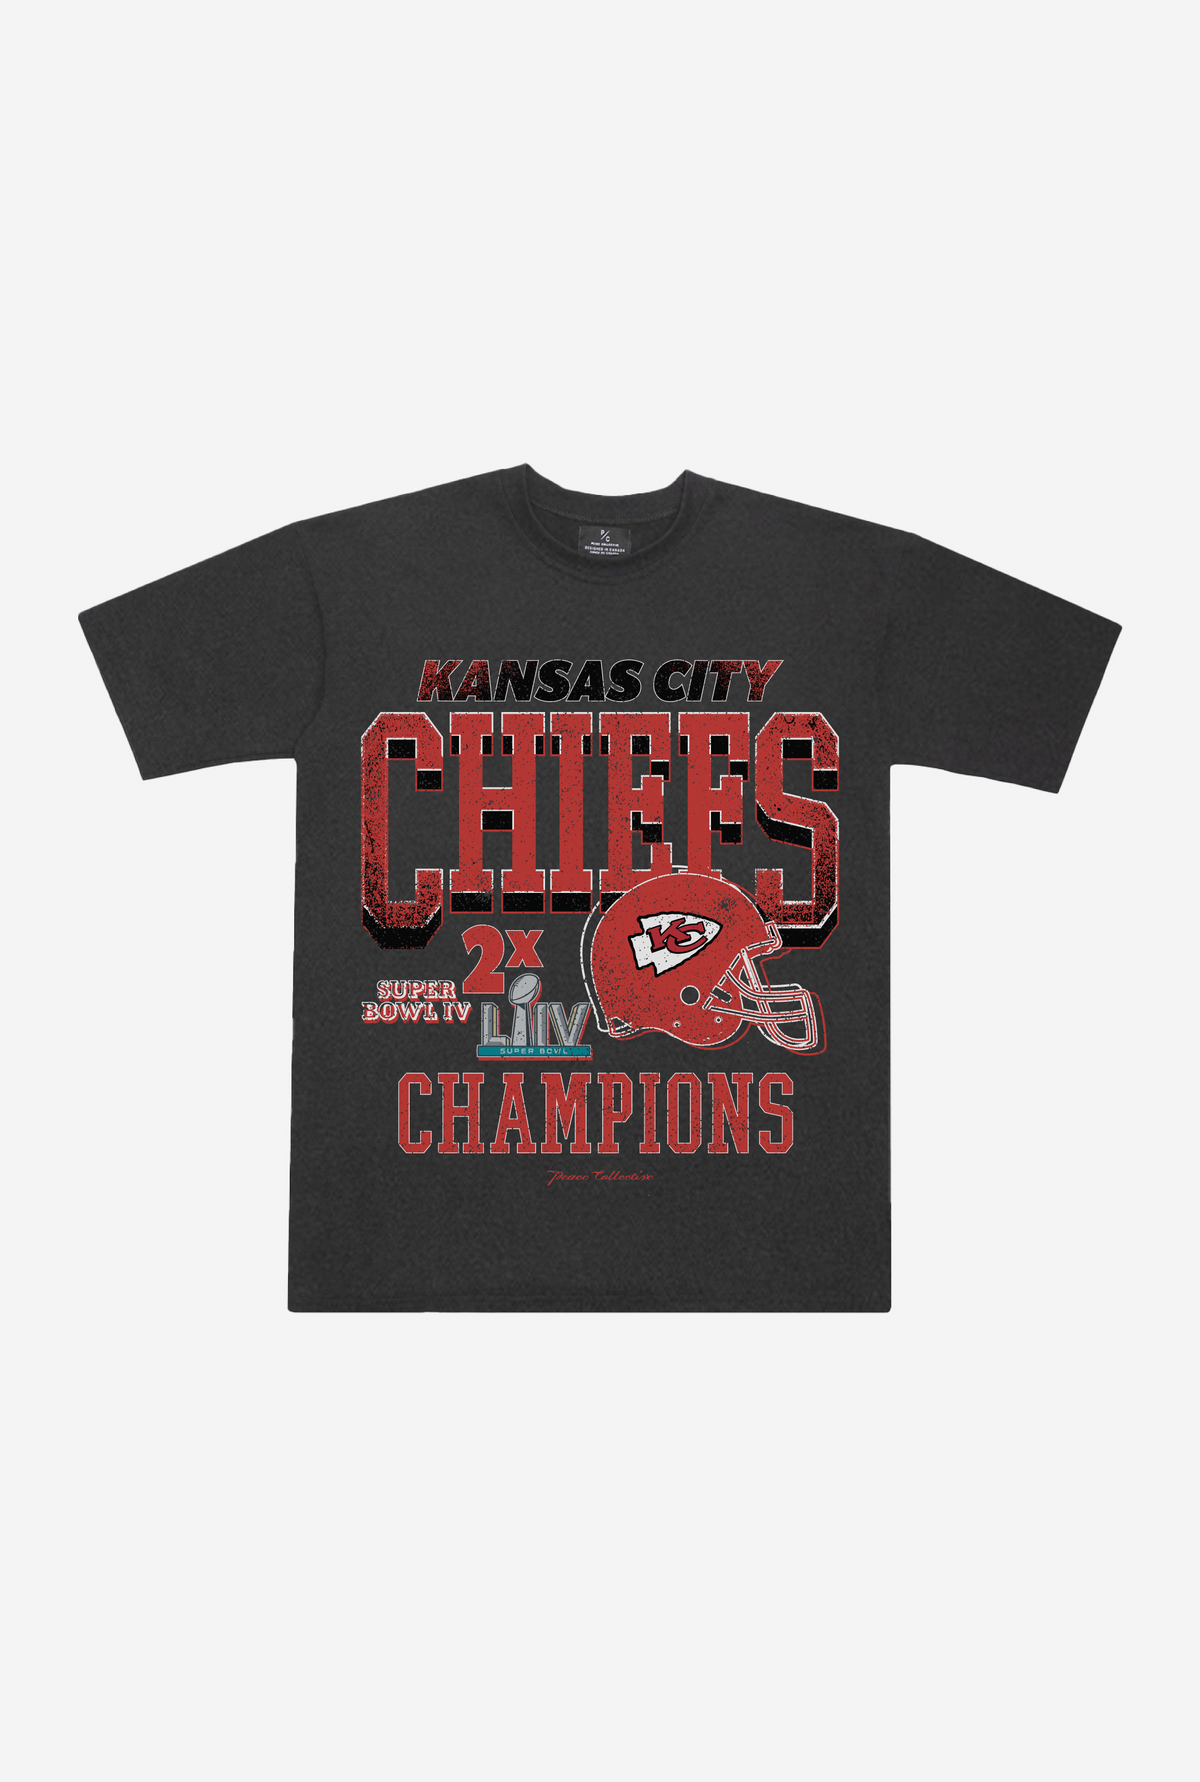 Kansas City Chiefs Vintage Championship T-Shirt - Black